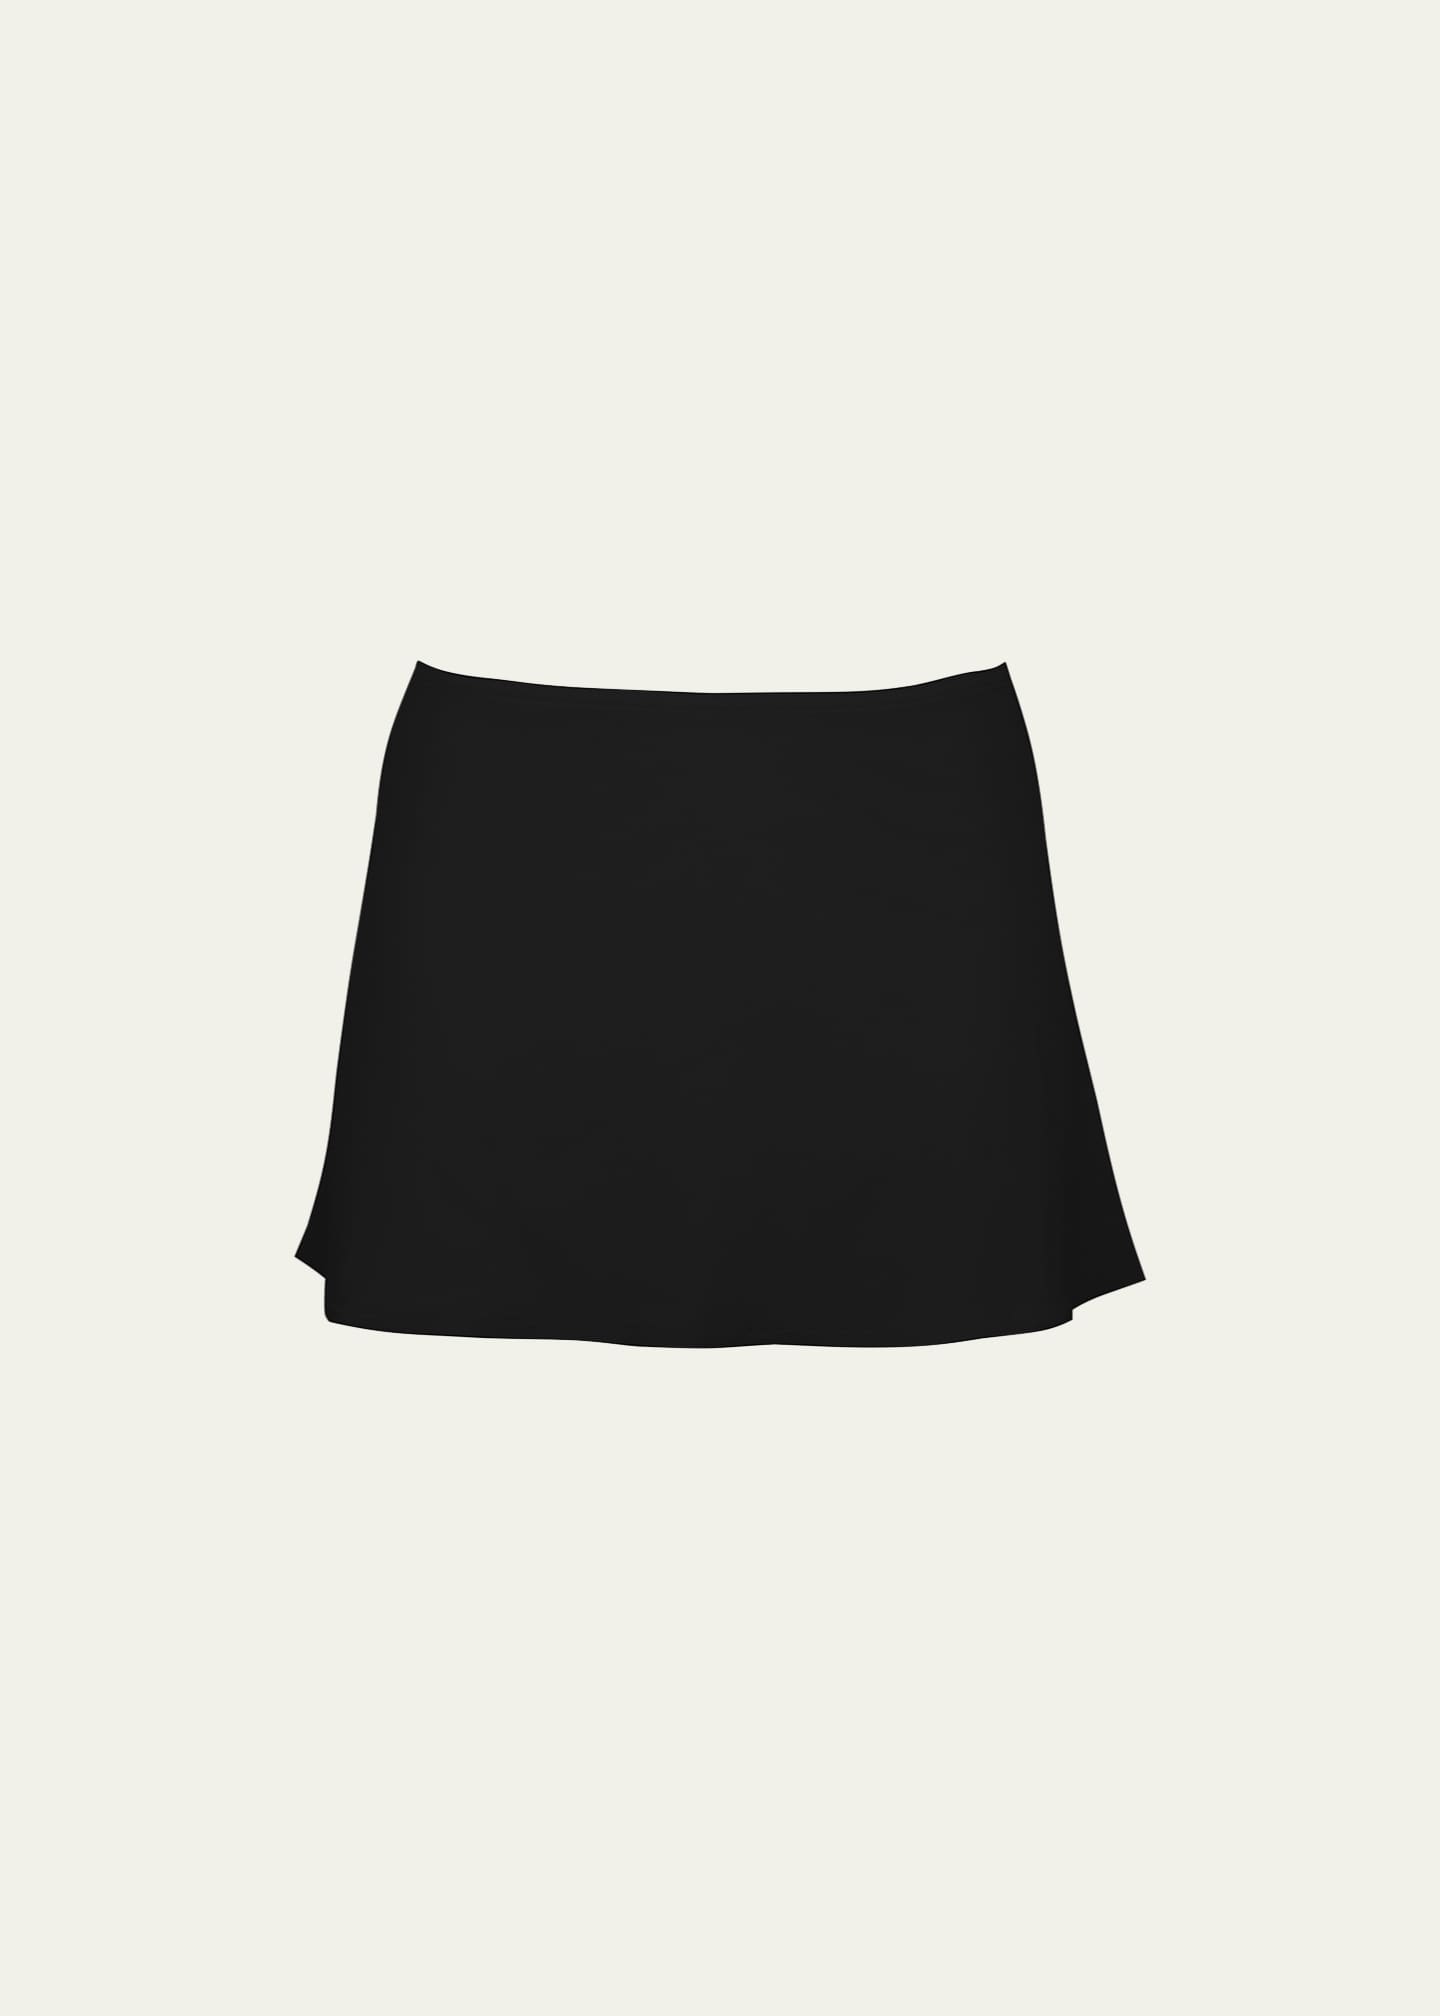 Karla Colletto Flared Swim Skirt Image 1 of 3